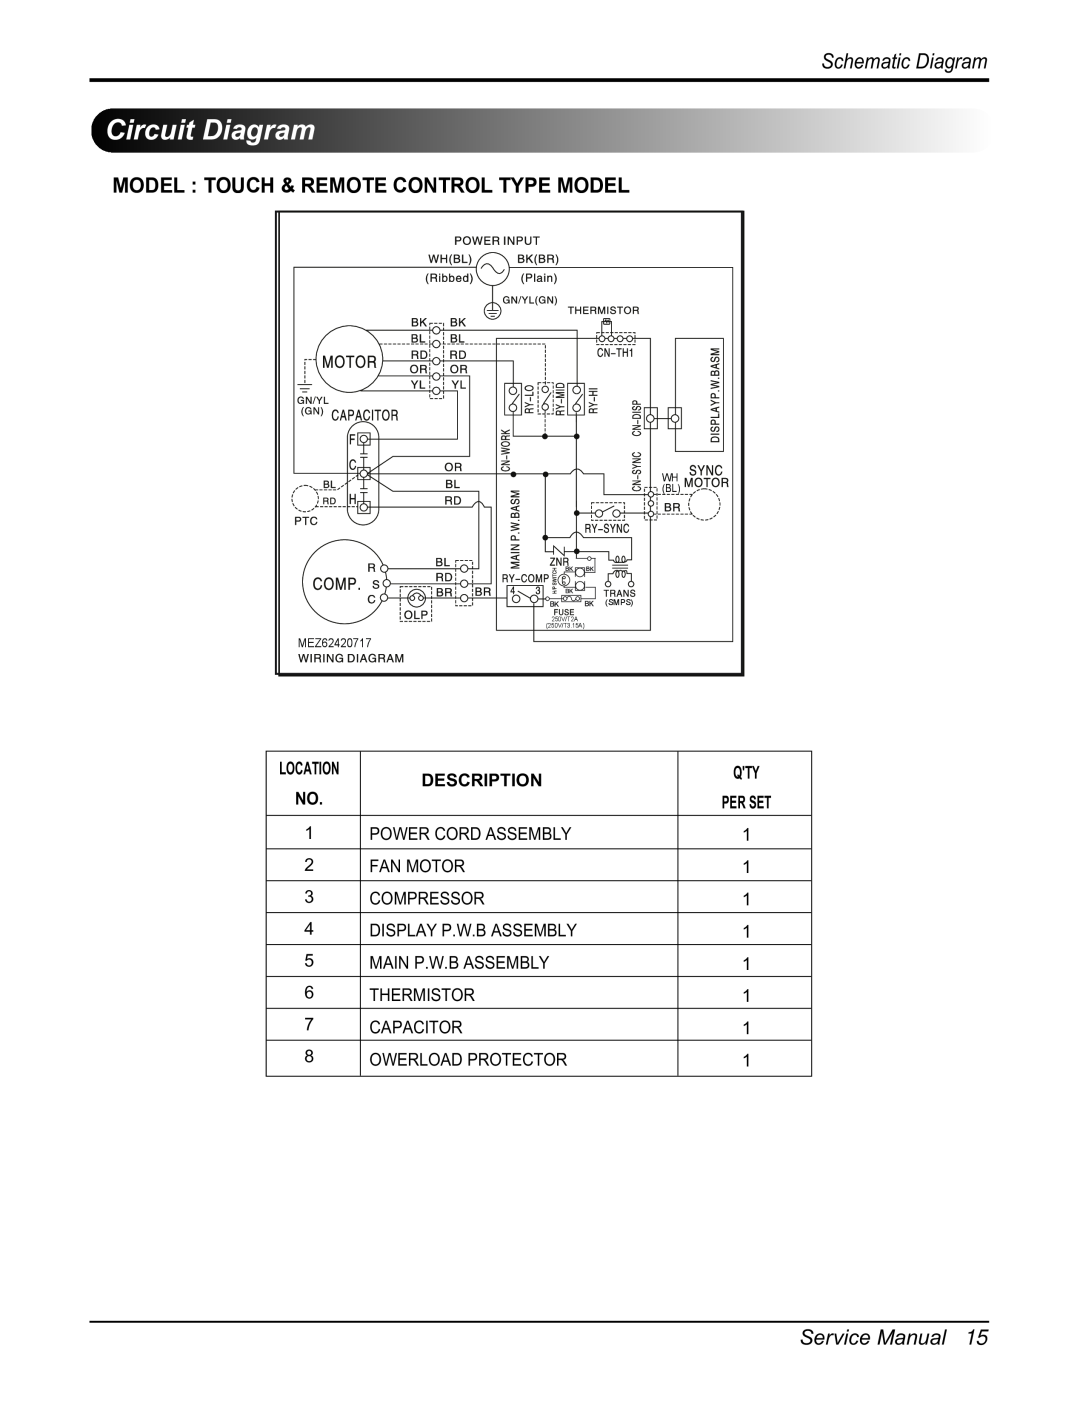 Friedrich CP10F10, CP12F10 manual Circuit Diagram, Schematic Diagram, Description 